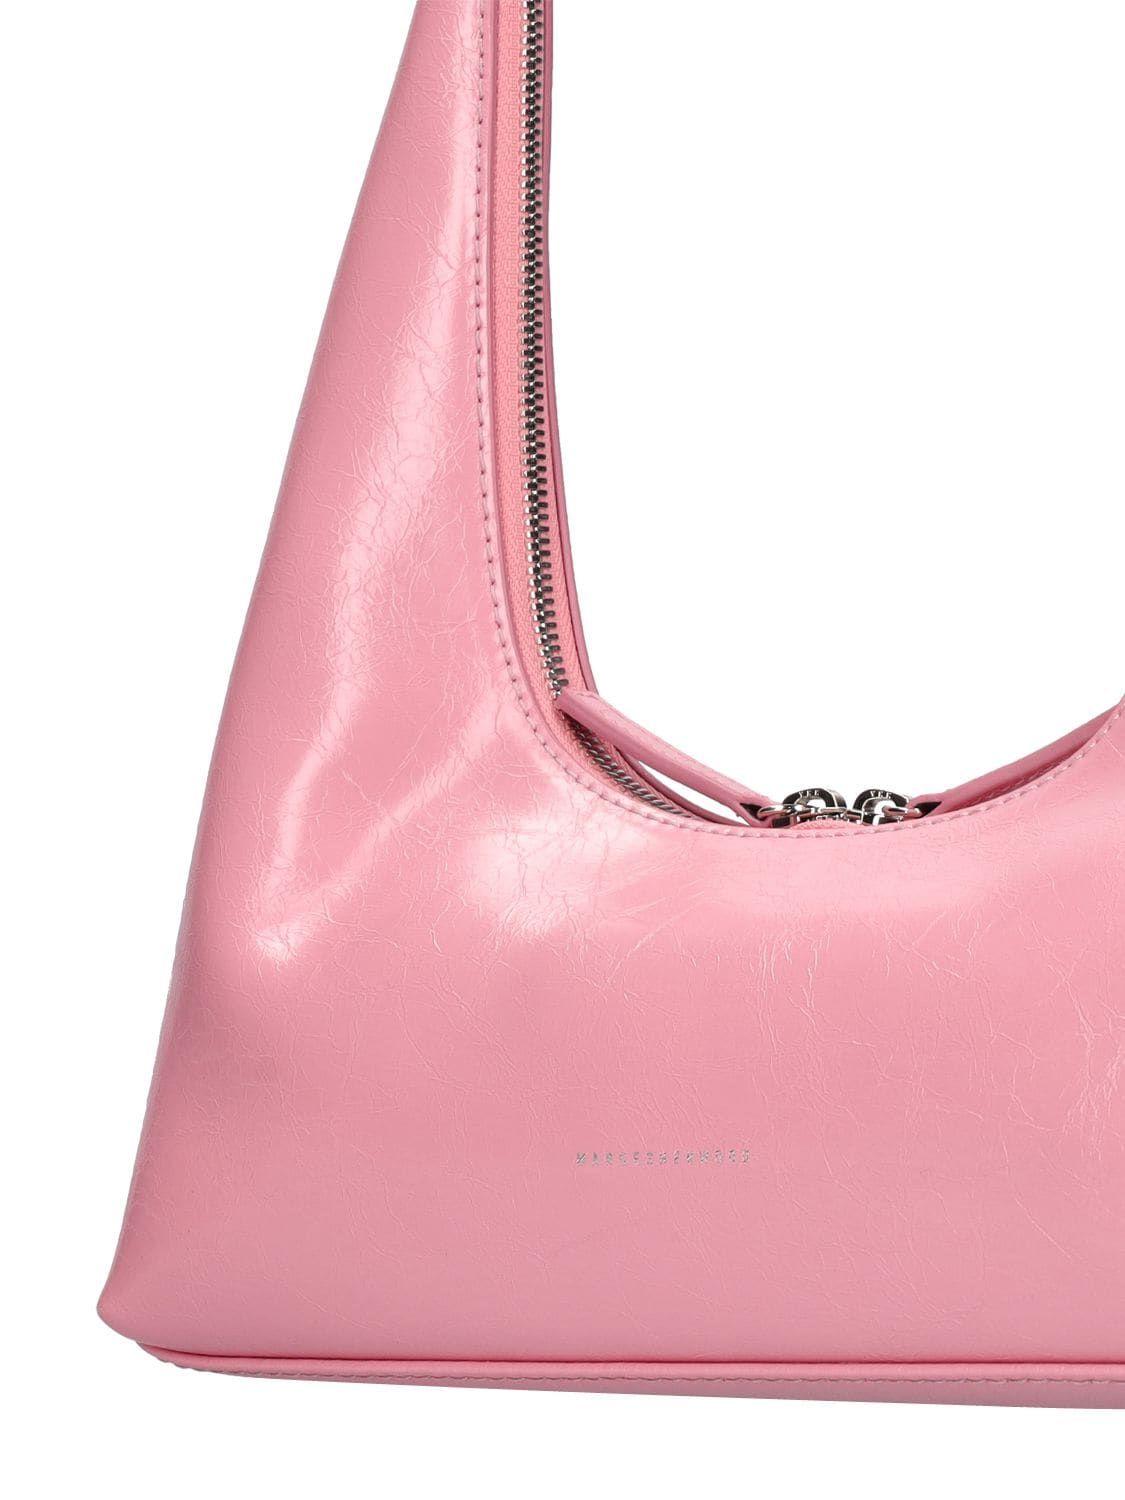 Marge Sherwood | Women Hobo Leather Shoulder Bag Berry Pink Unique